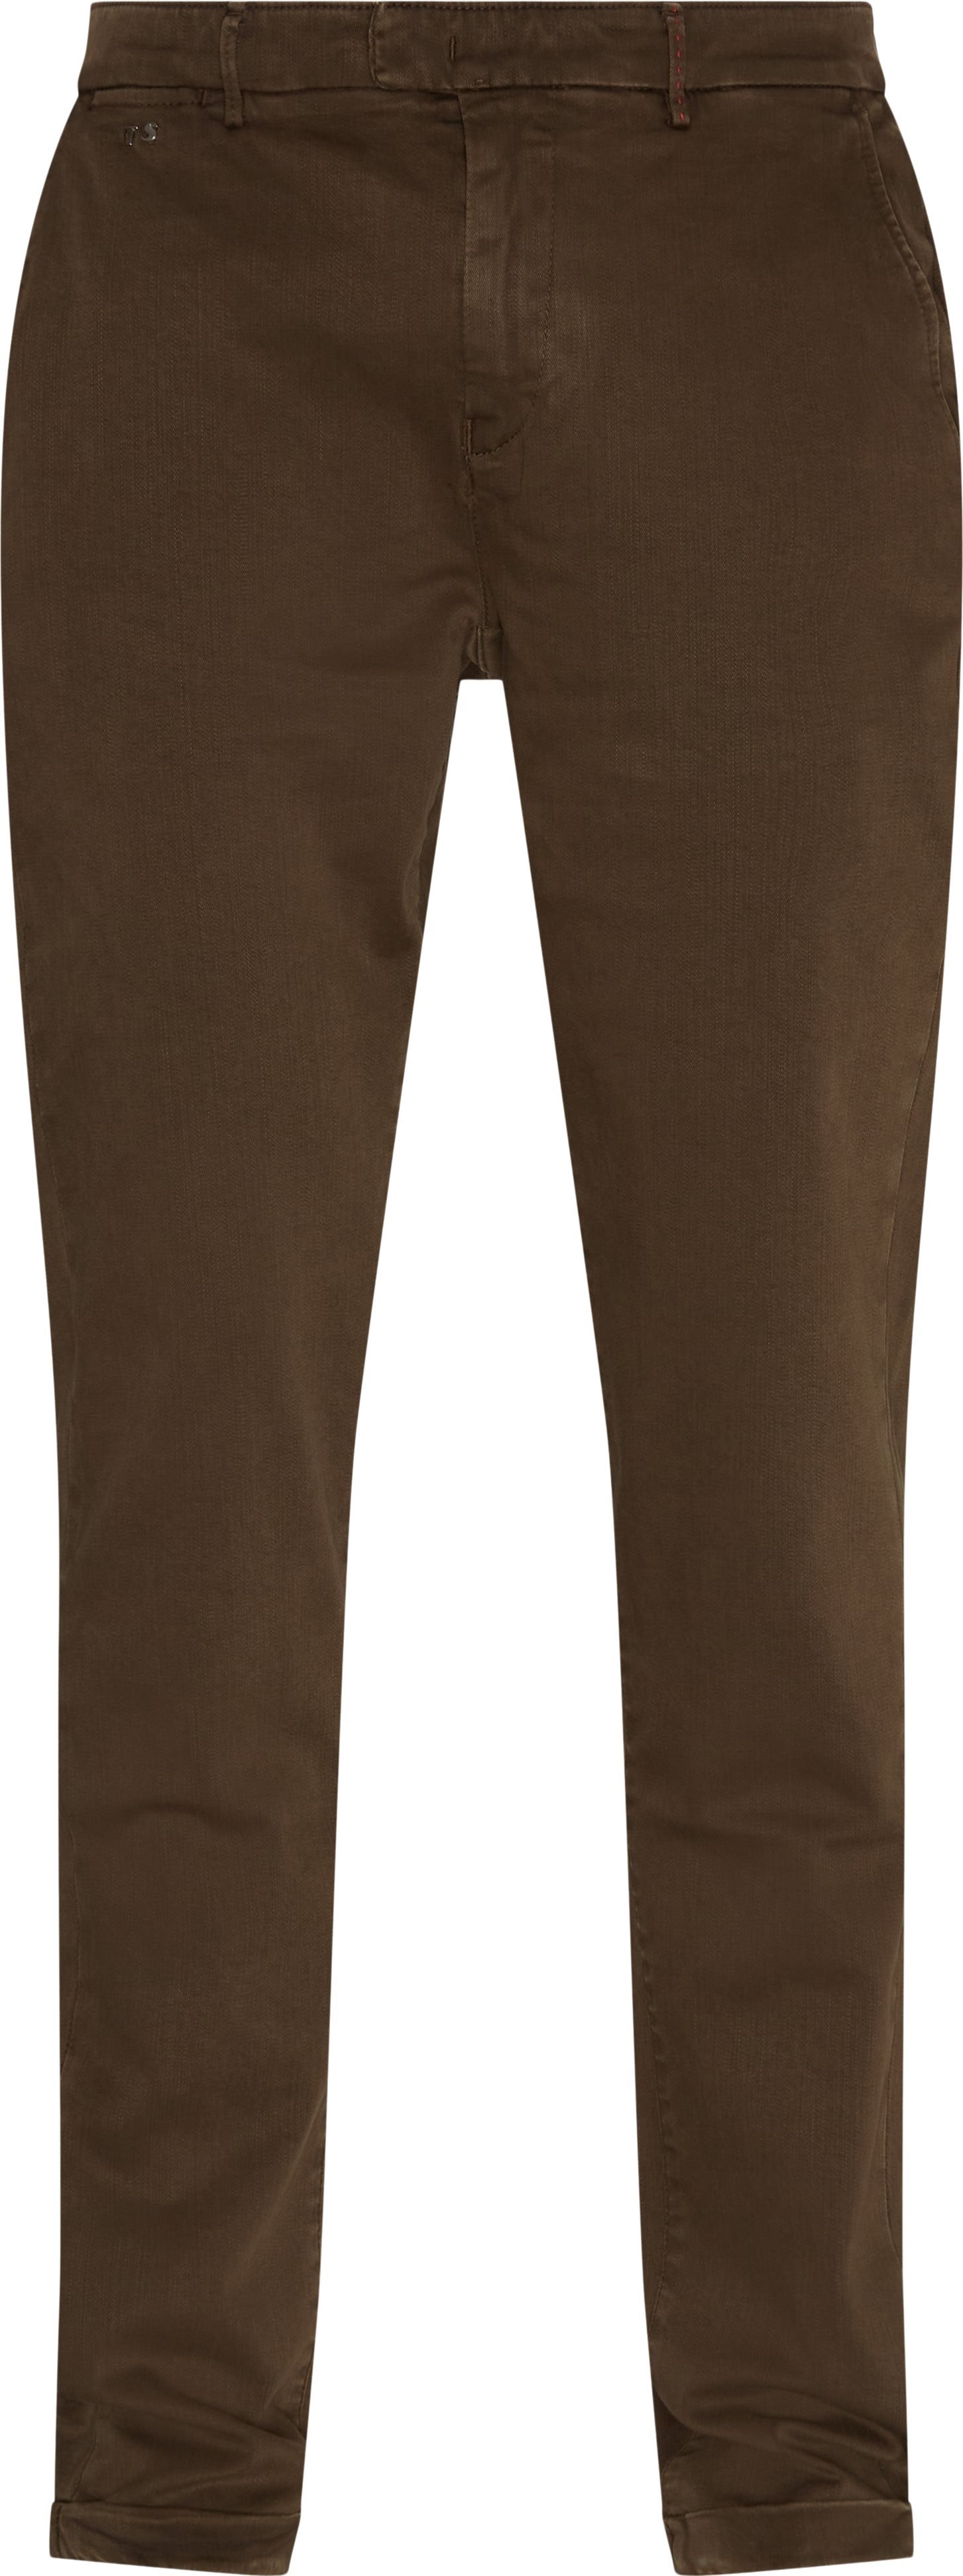 Luis Regular - Trousers - Slim fit - Brown